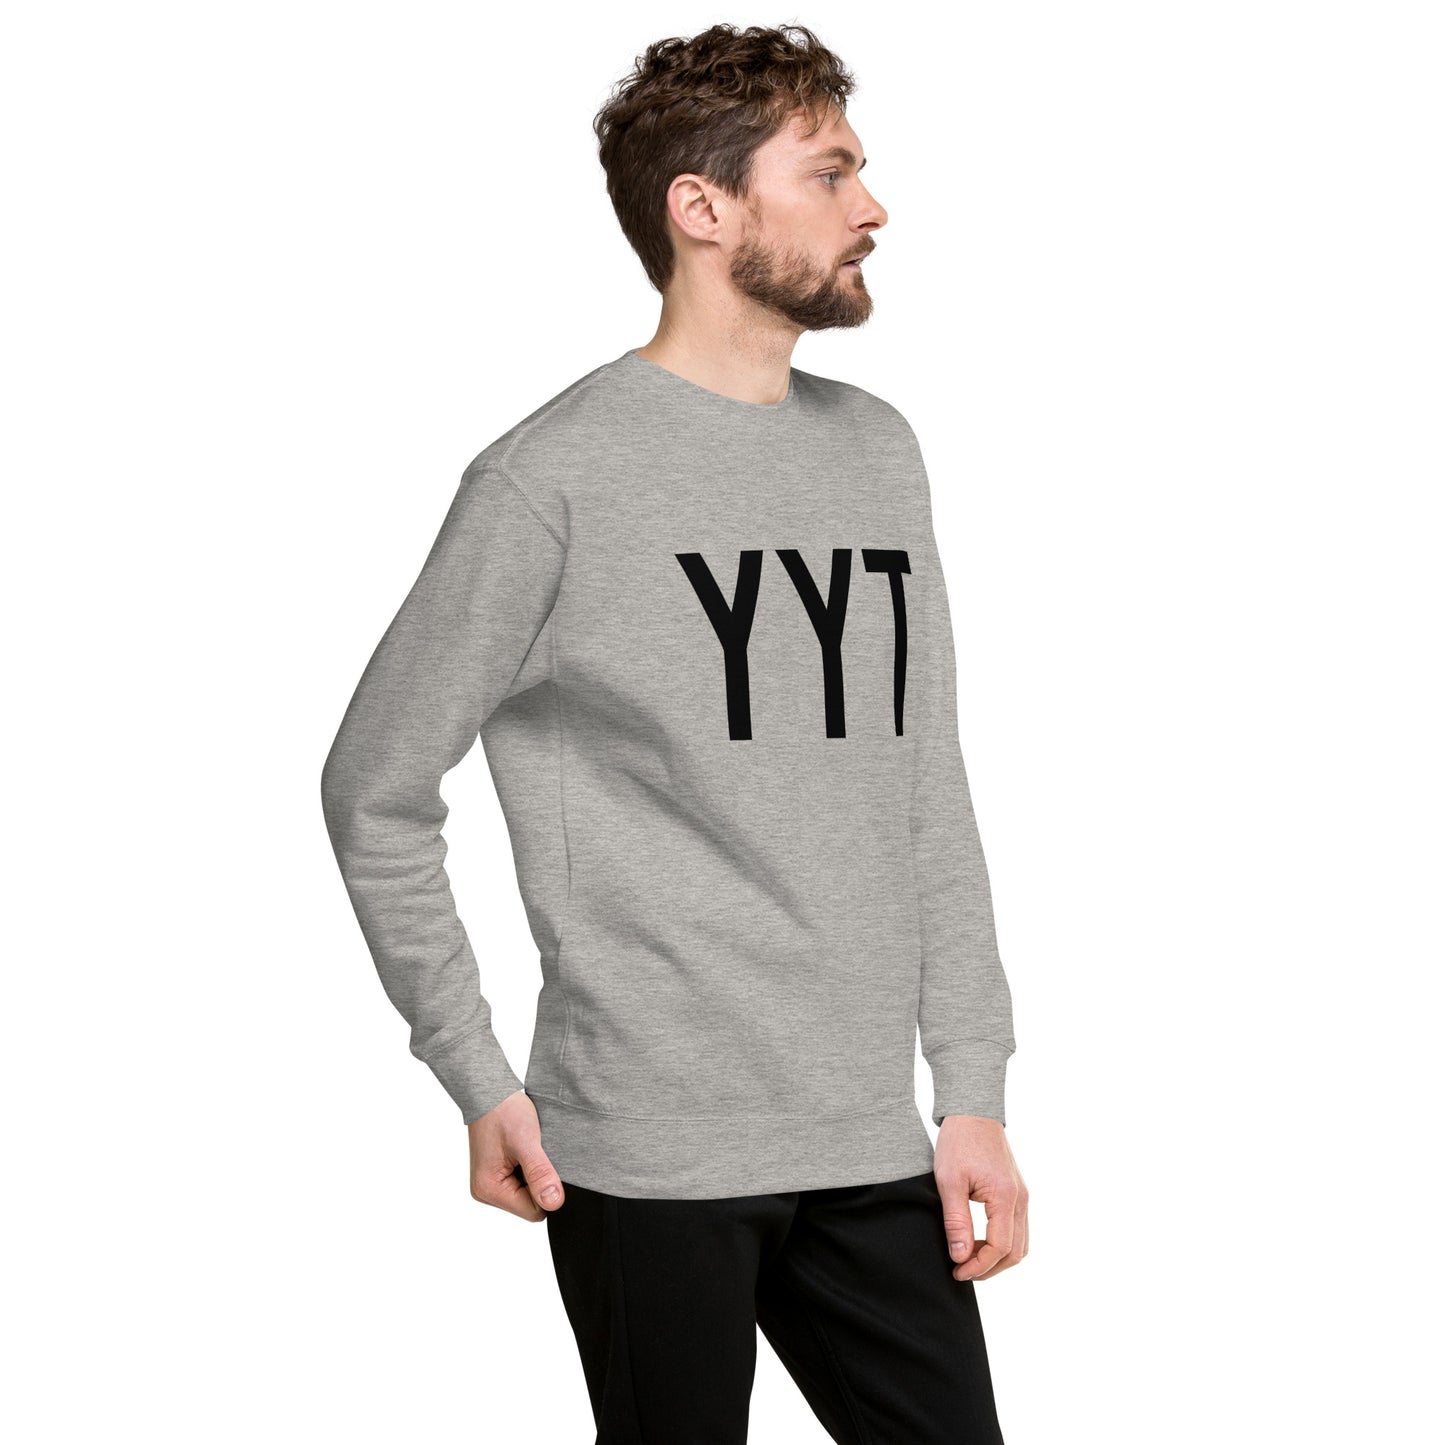 Aviation-Theme Premium Sweatshirt - Black • YYT St. John's • YHM Designs - Image 02